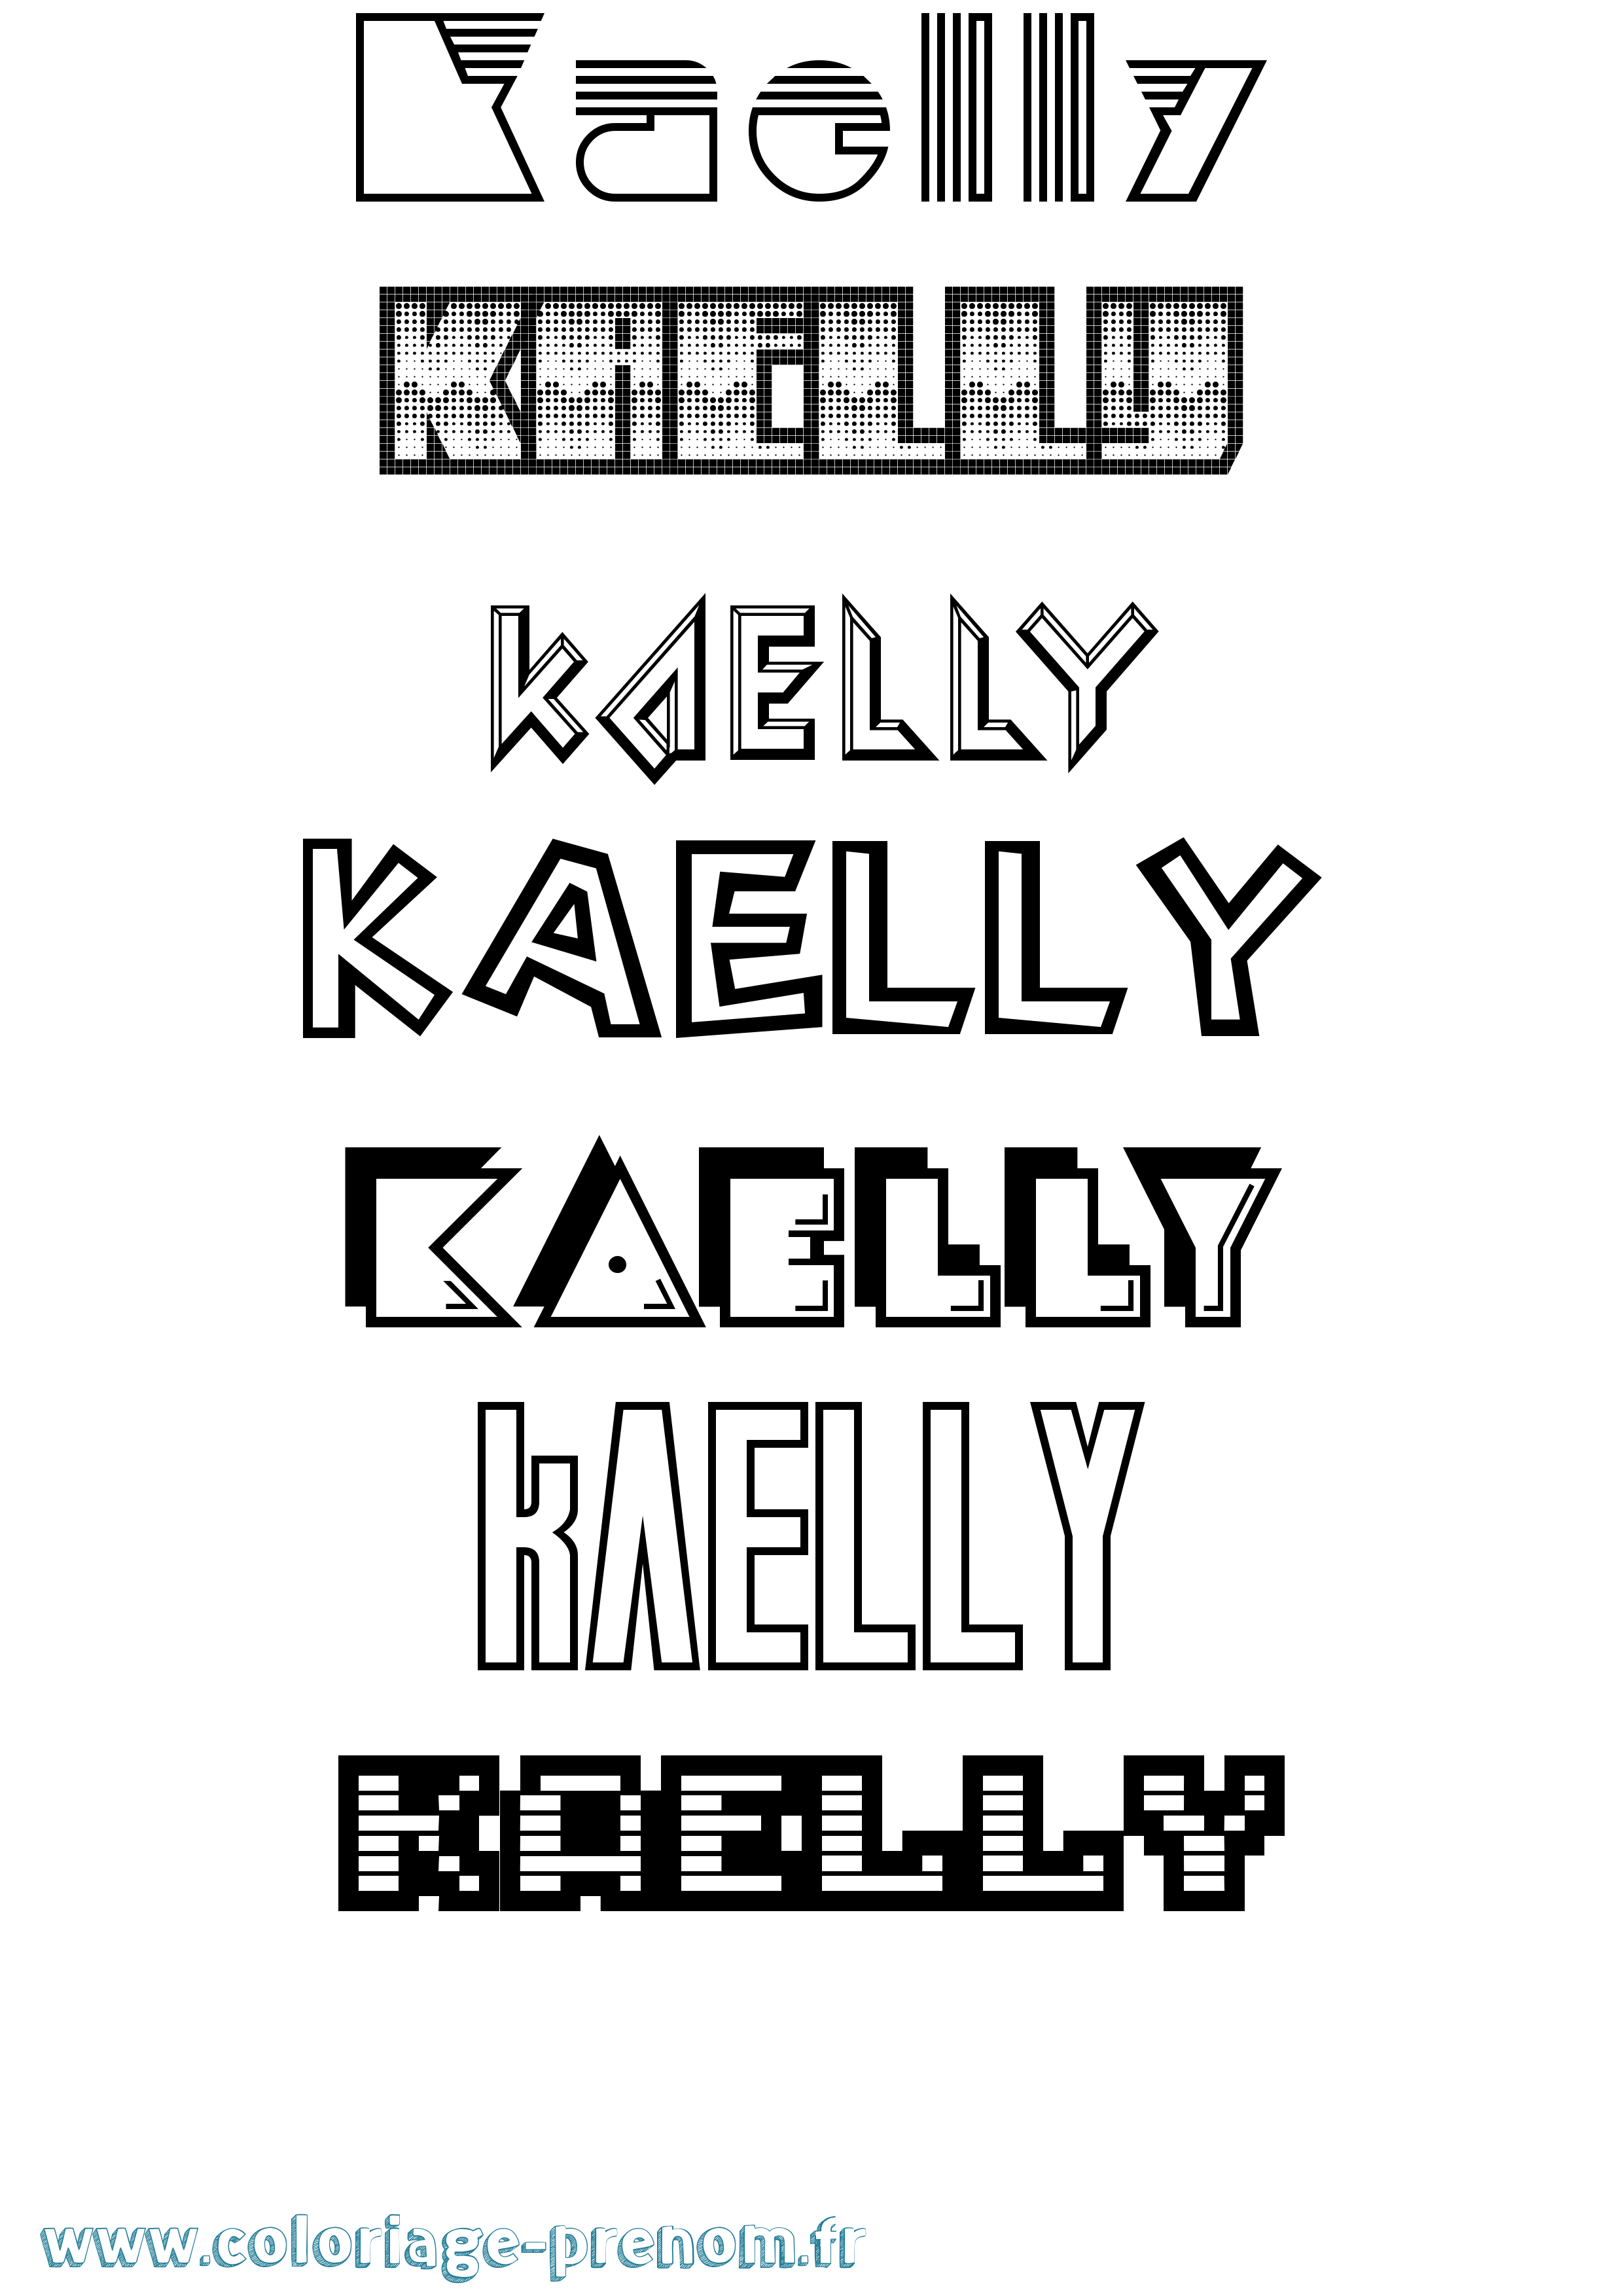 Coloriage prénom Kaelly Jeux Vidéos